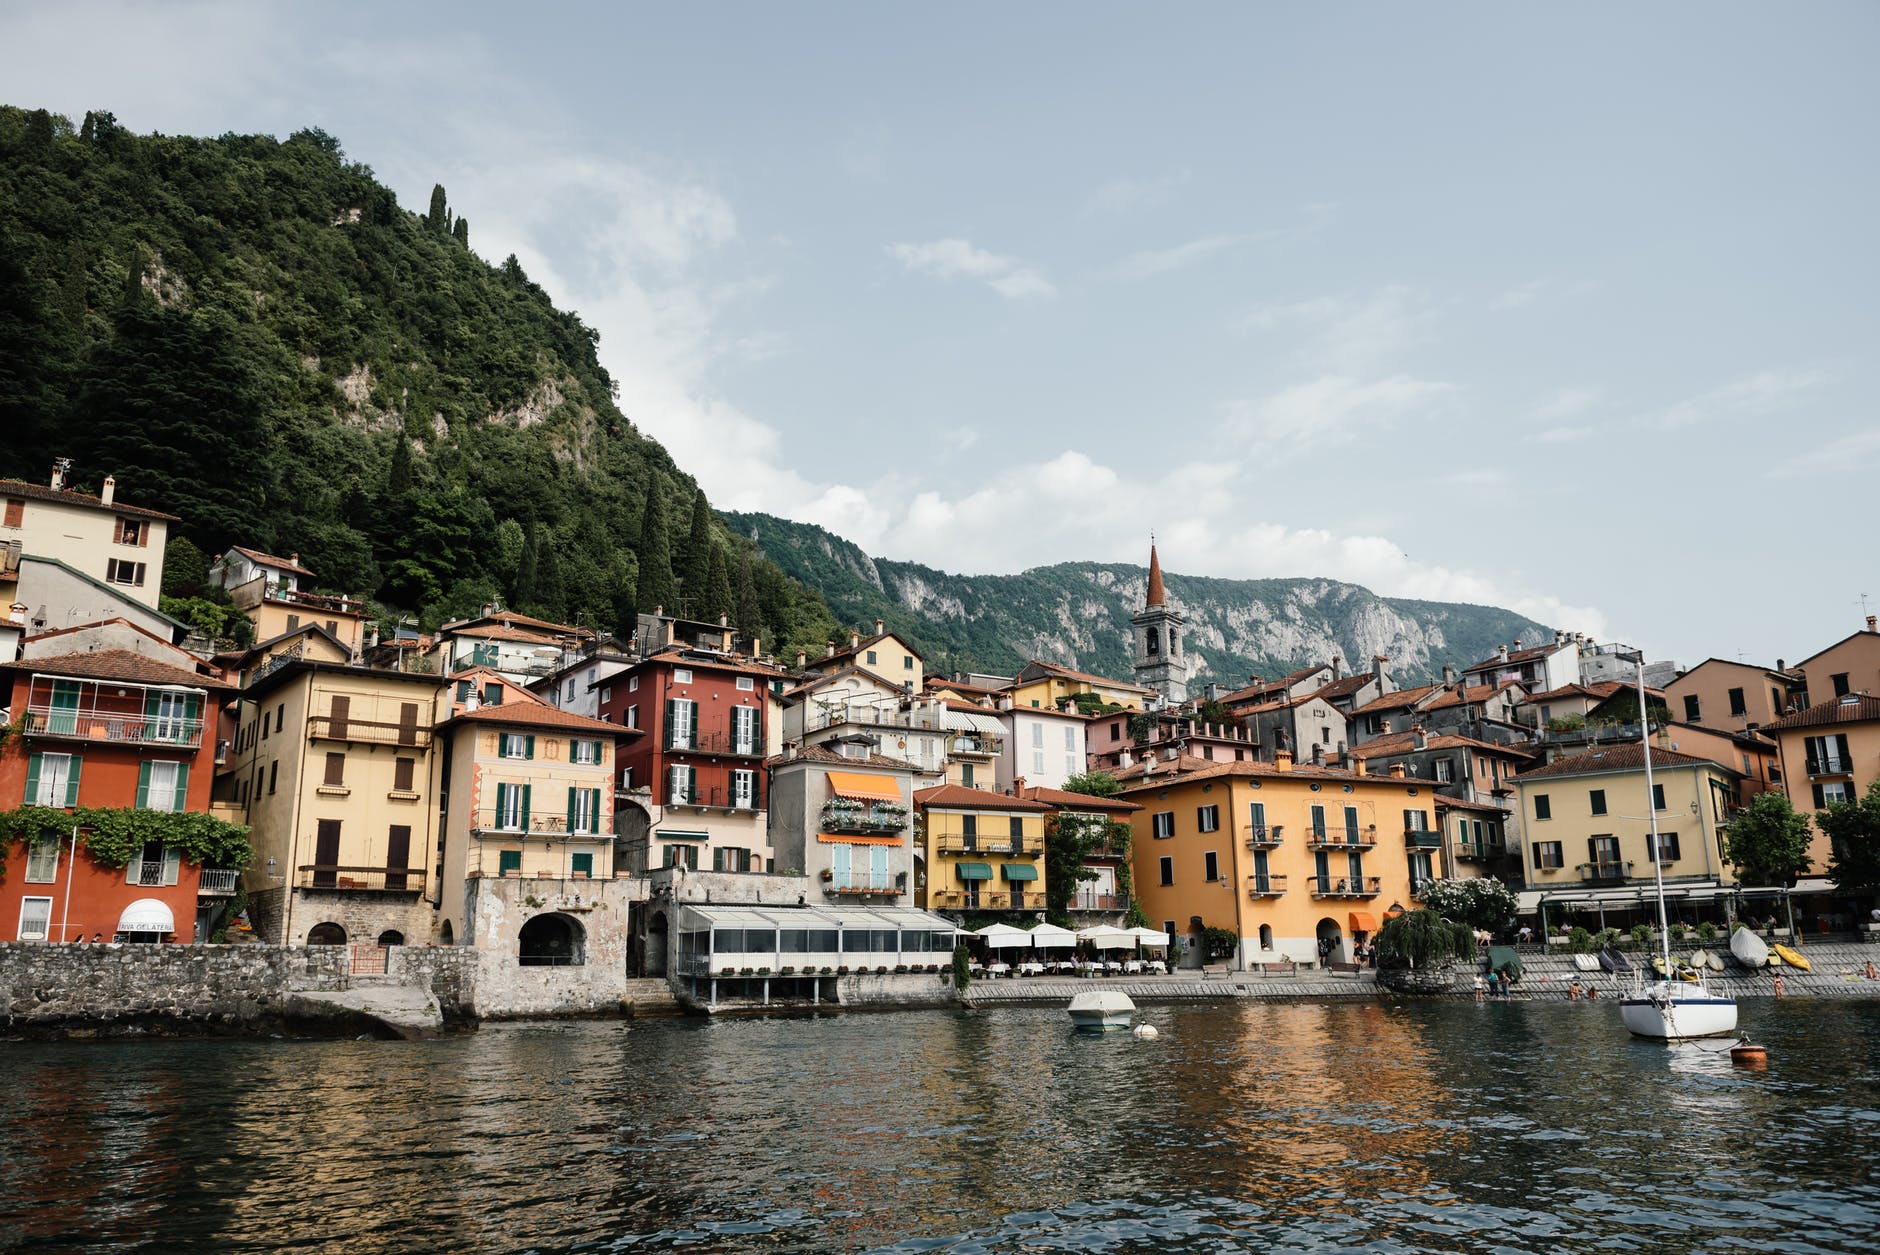 Jacob and Sarah honeymooned in Lake Como, Italy. | Source: Pexels